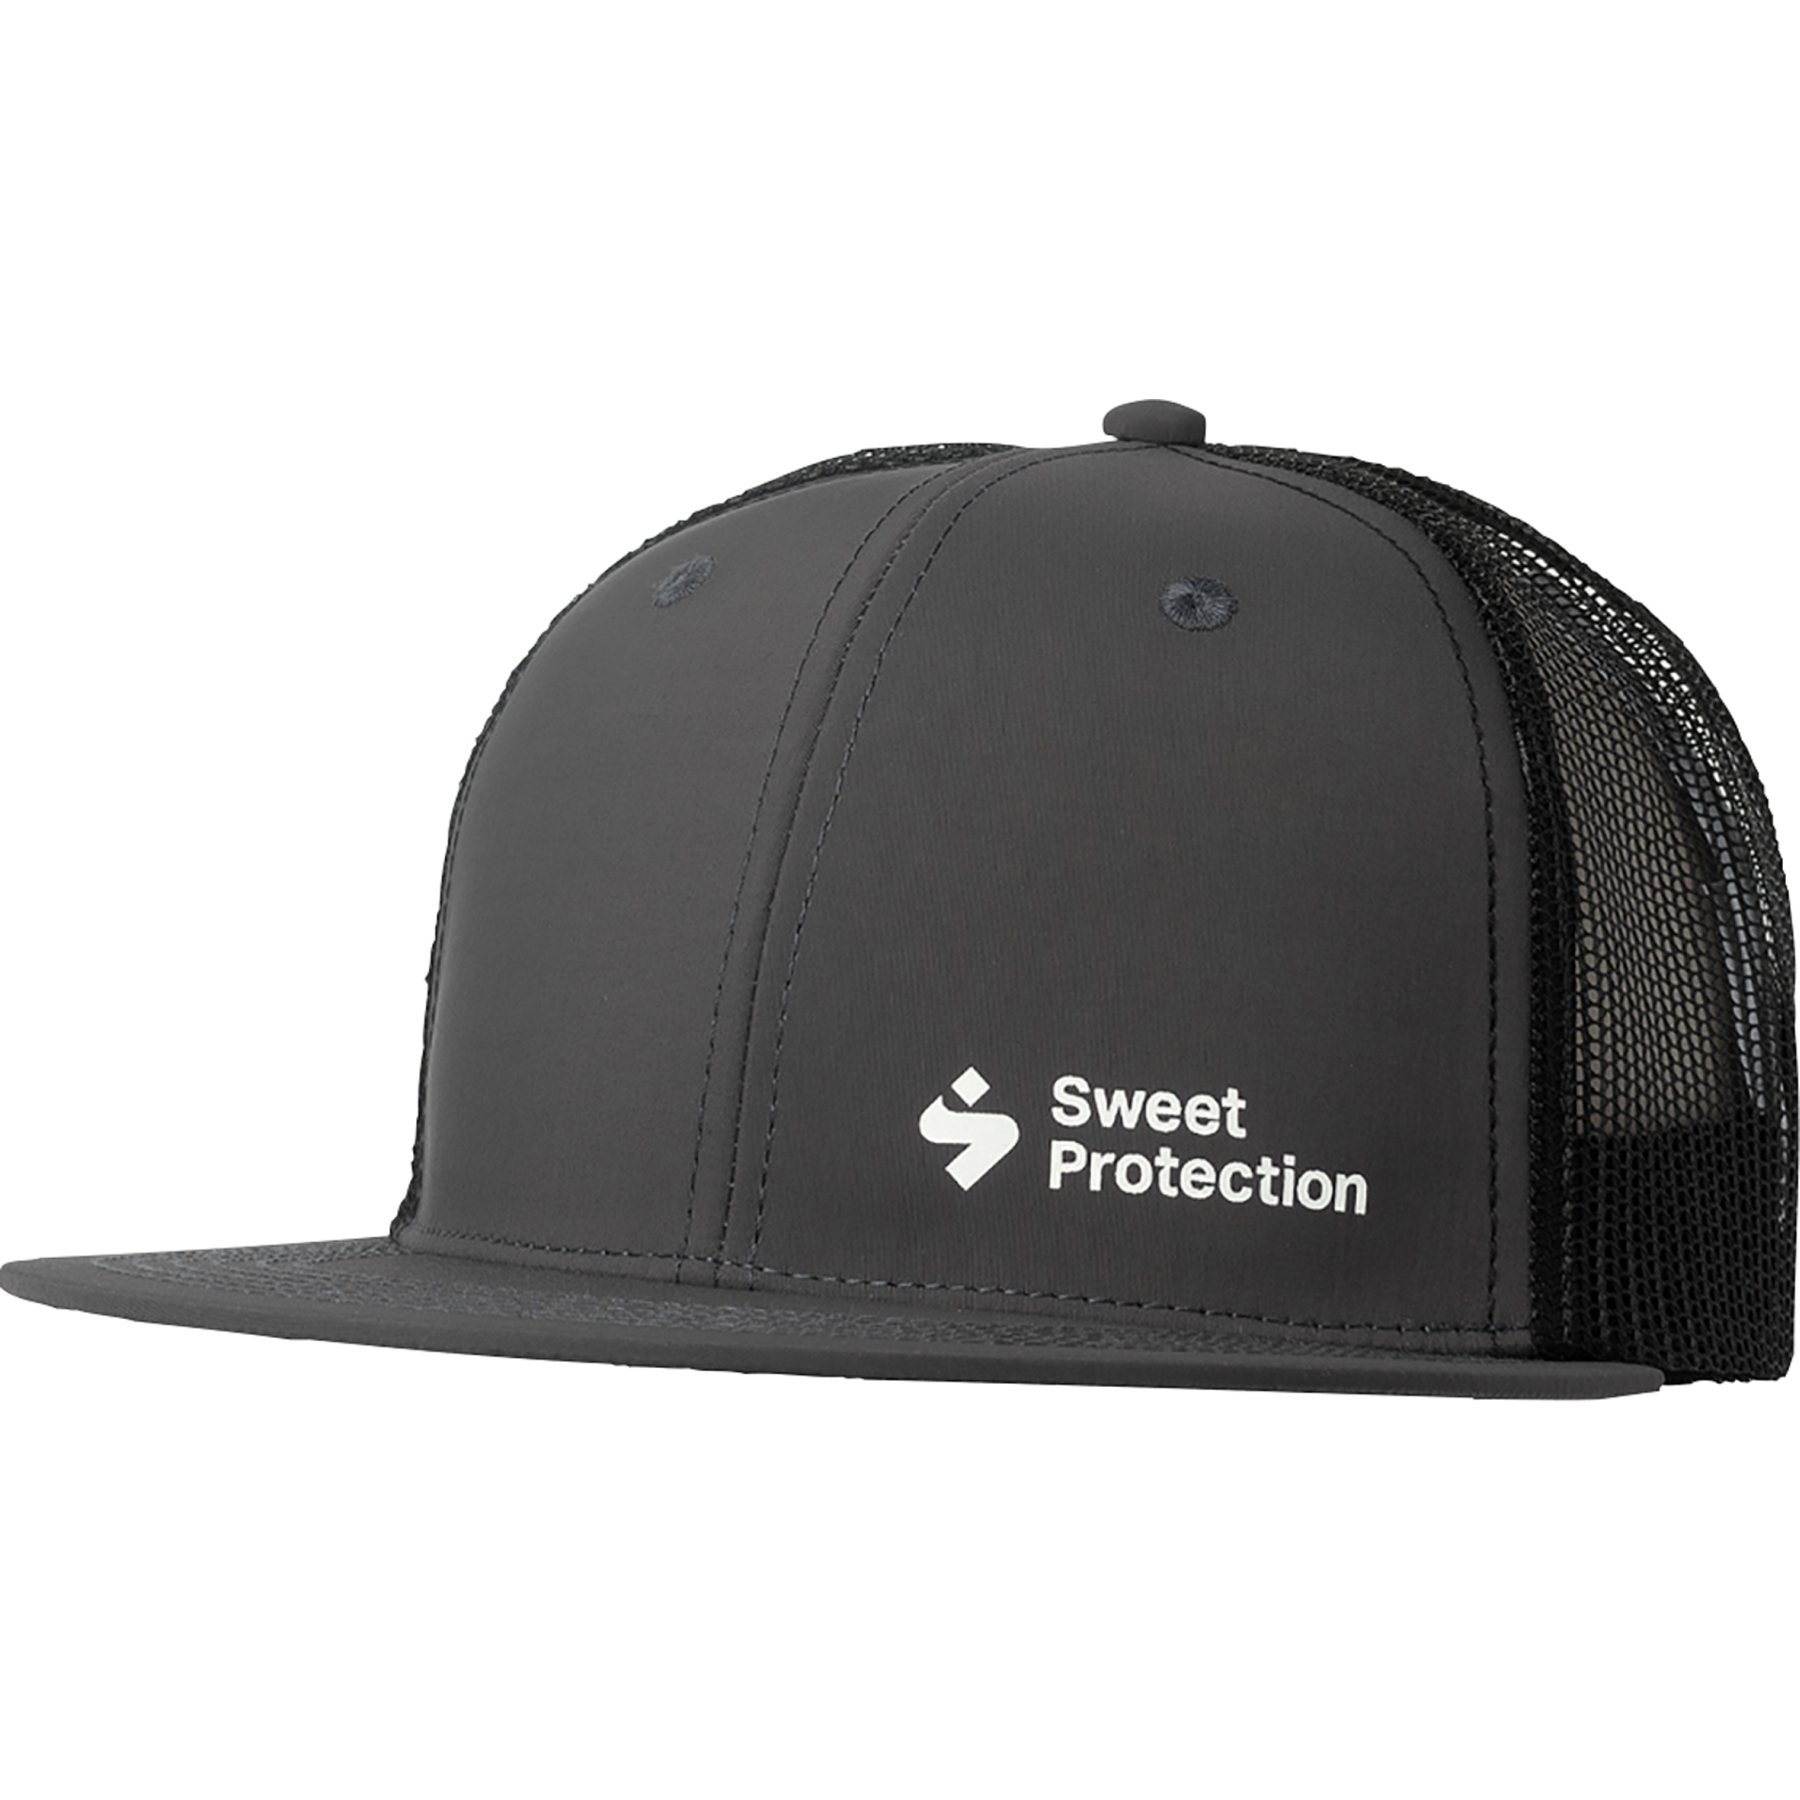 Produktbild von SWEET Protection Corporate Trucker Cap - Stone Gray